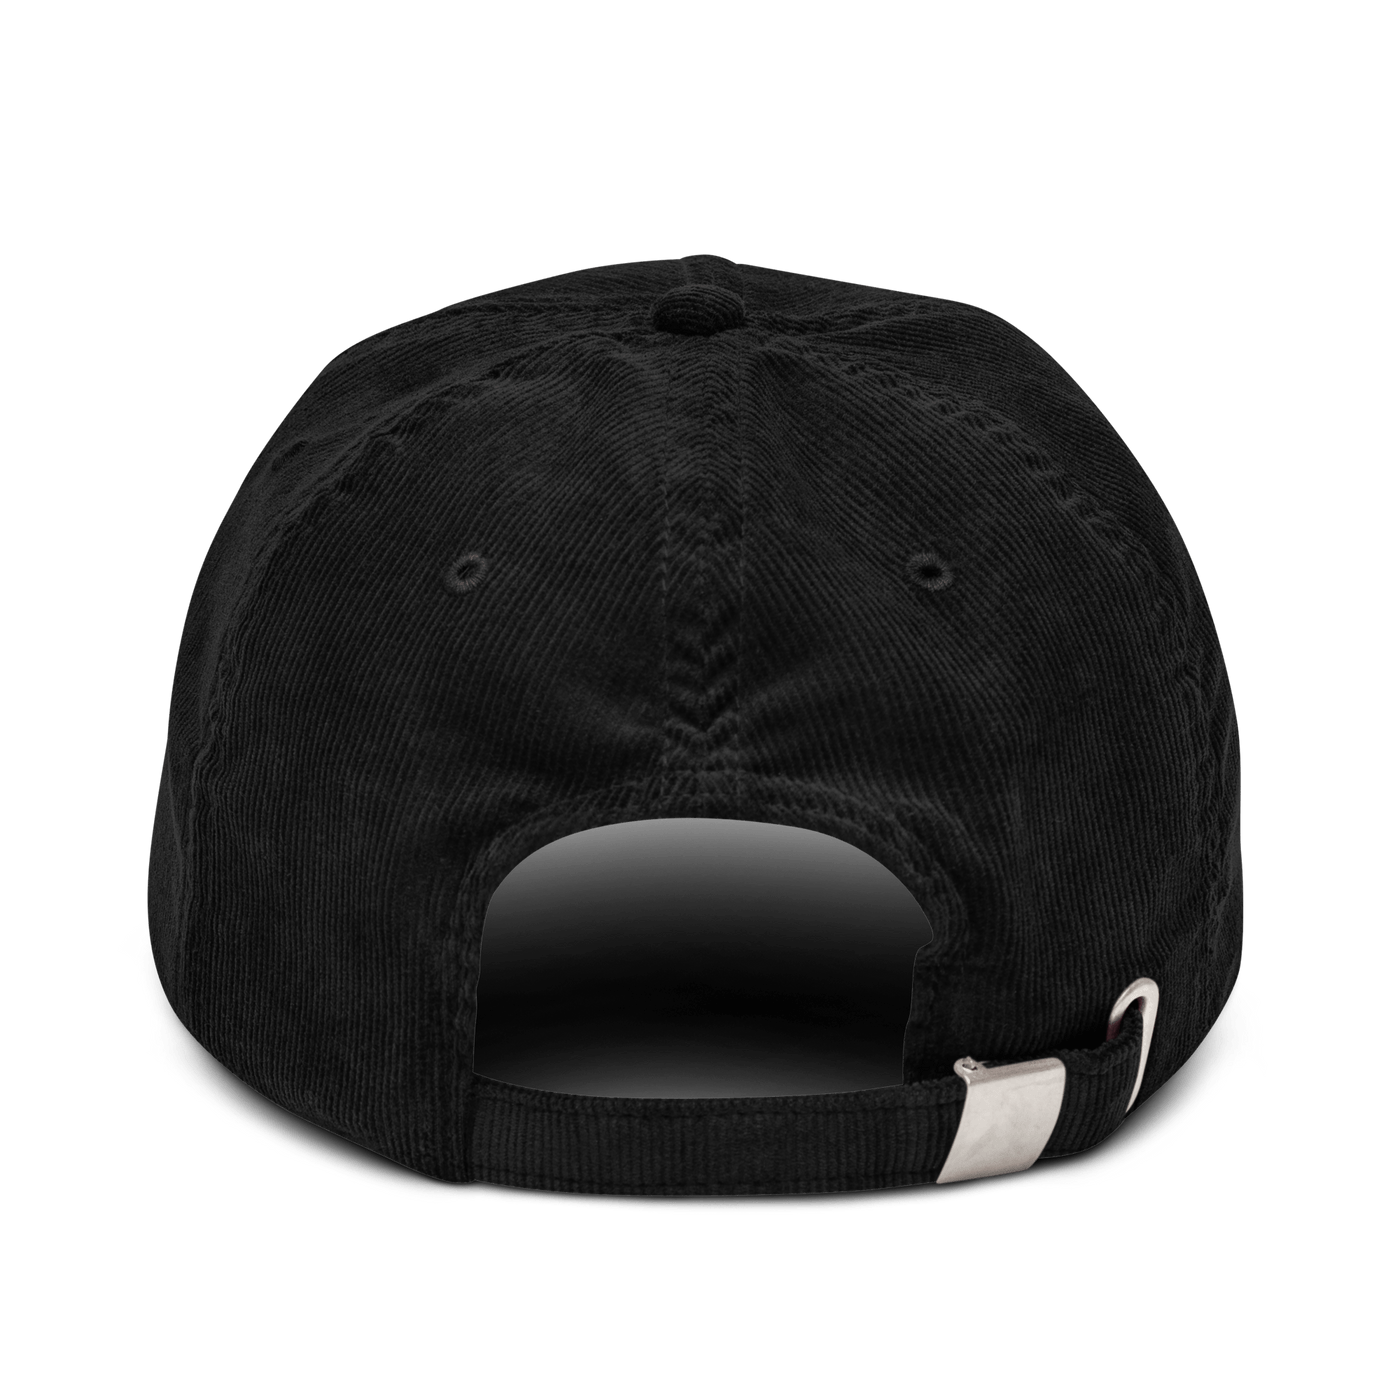 Pasta Corduroy hat - Black - - Just Another Cap Store